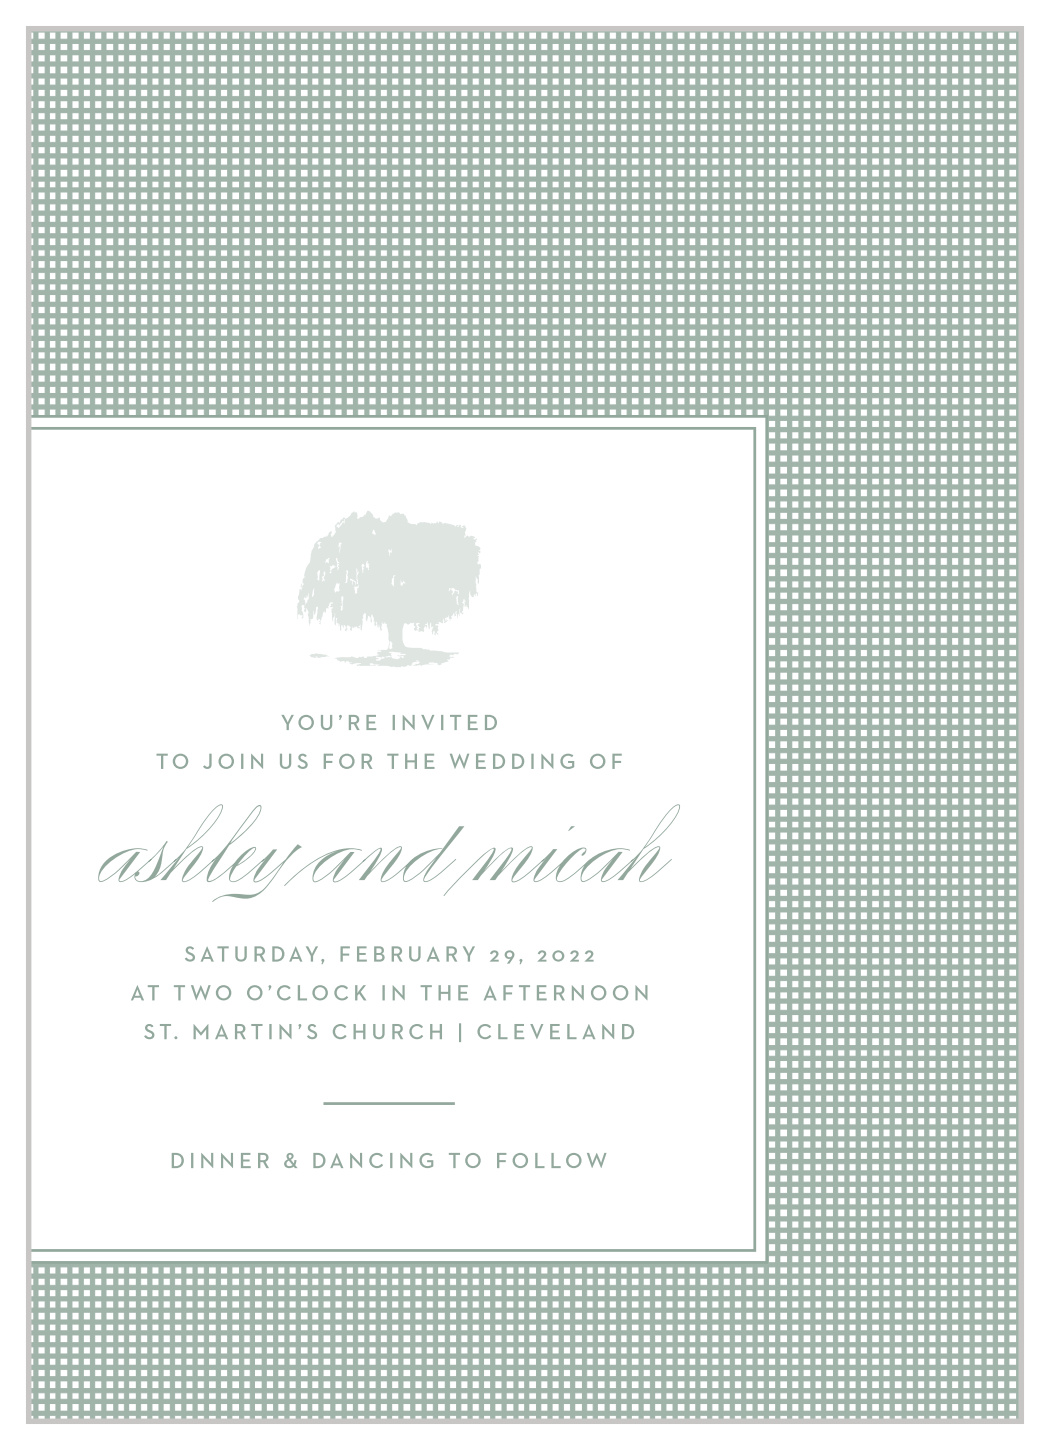 MaeMae's Willow Wedding Invitations